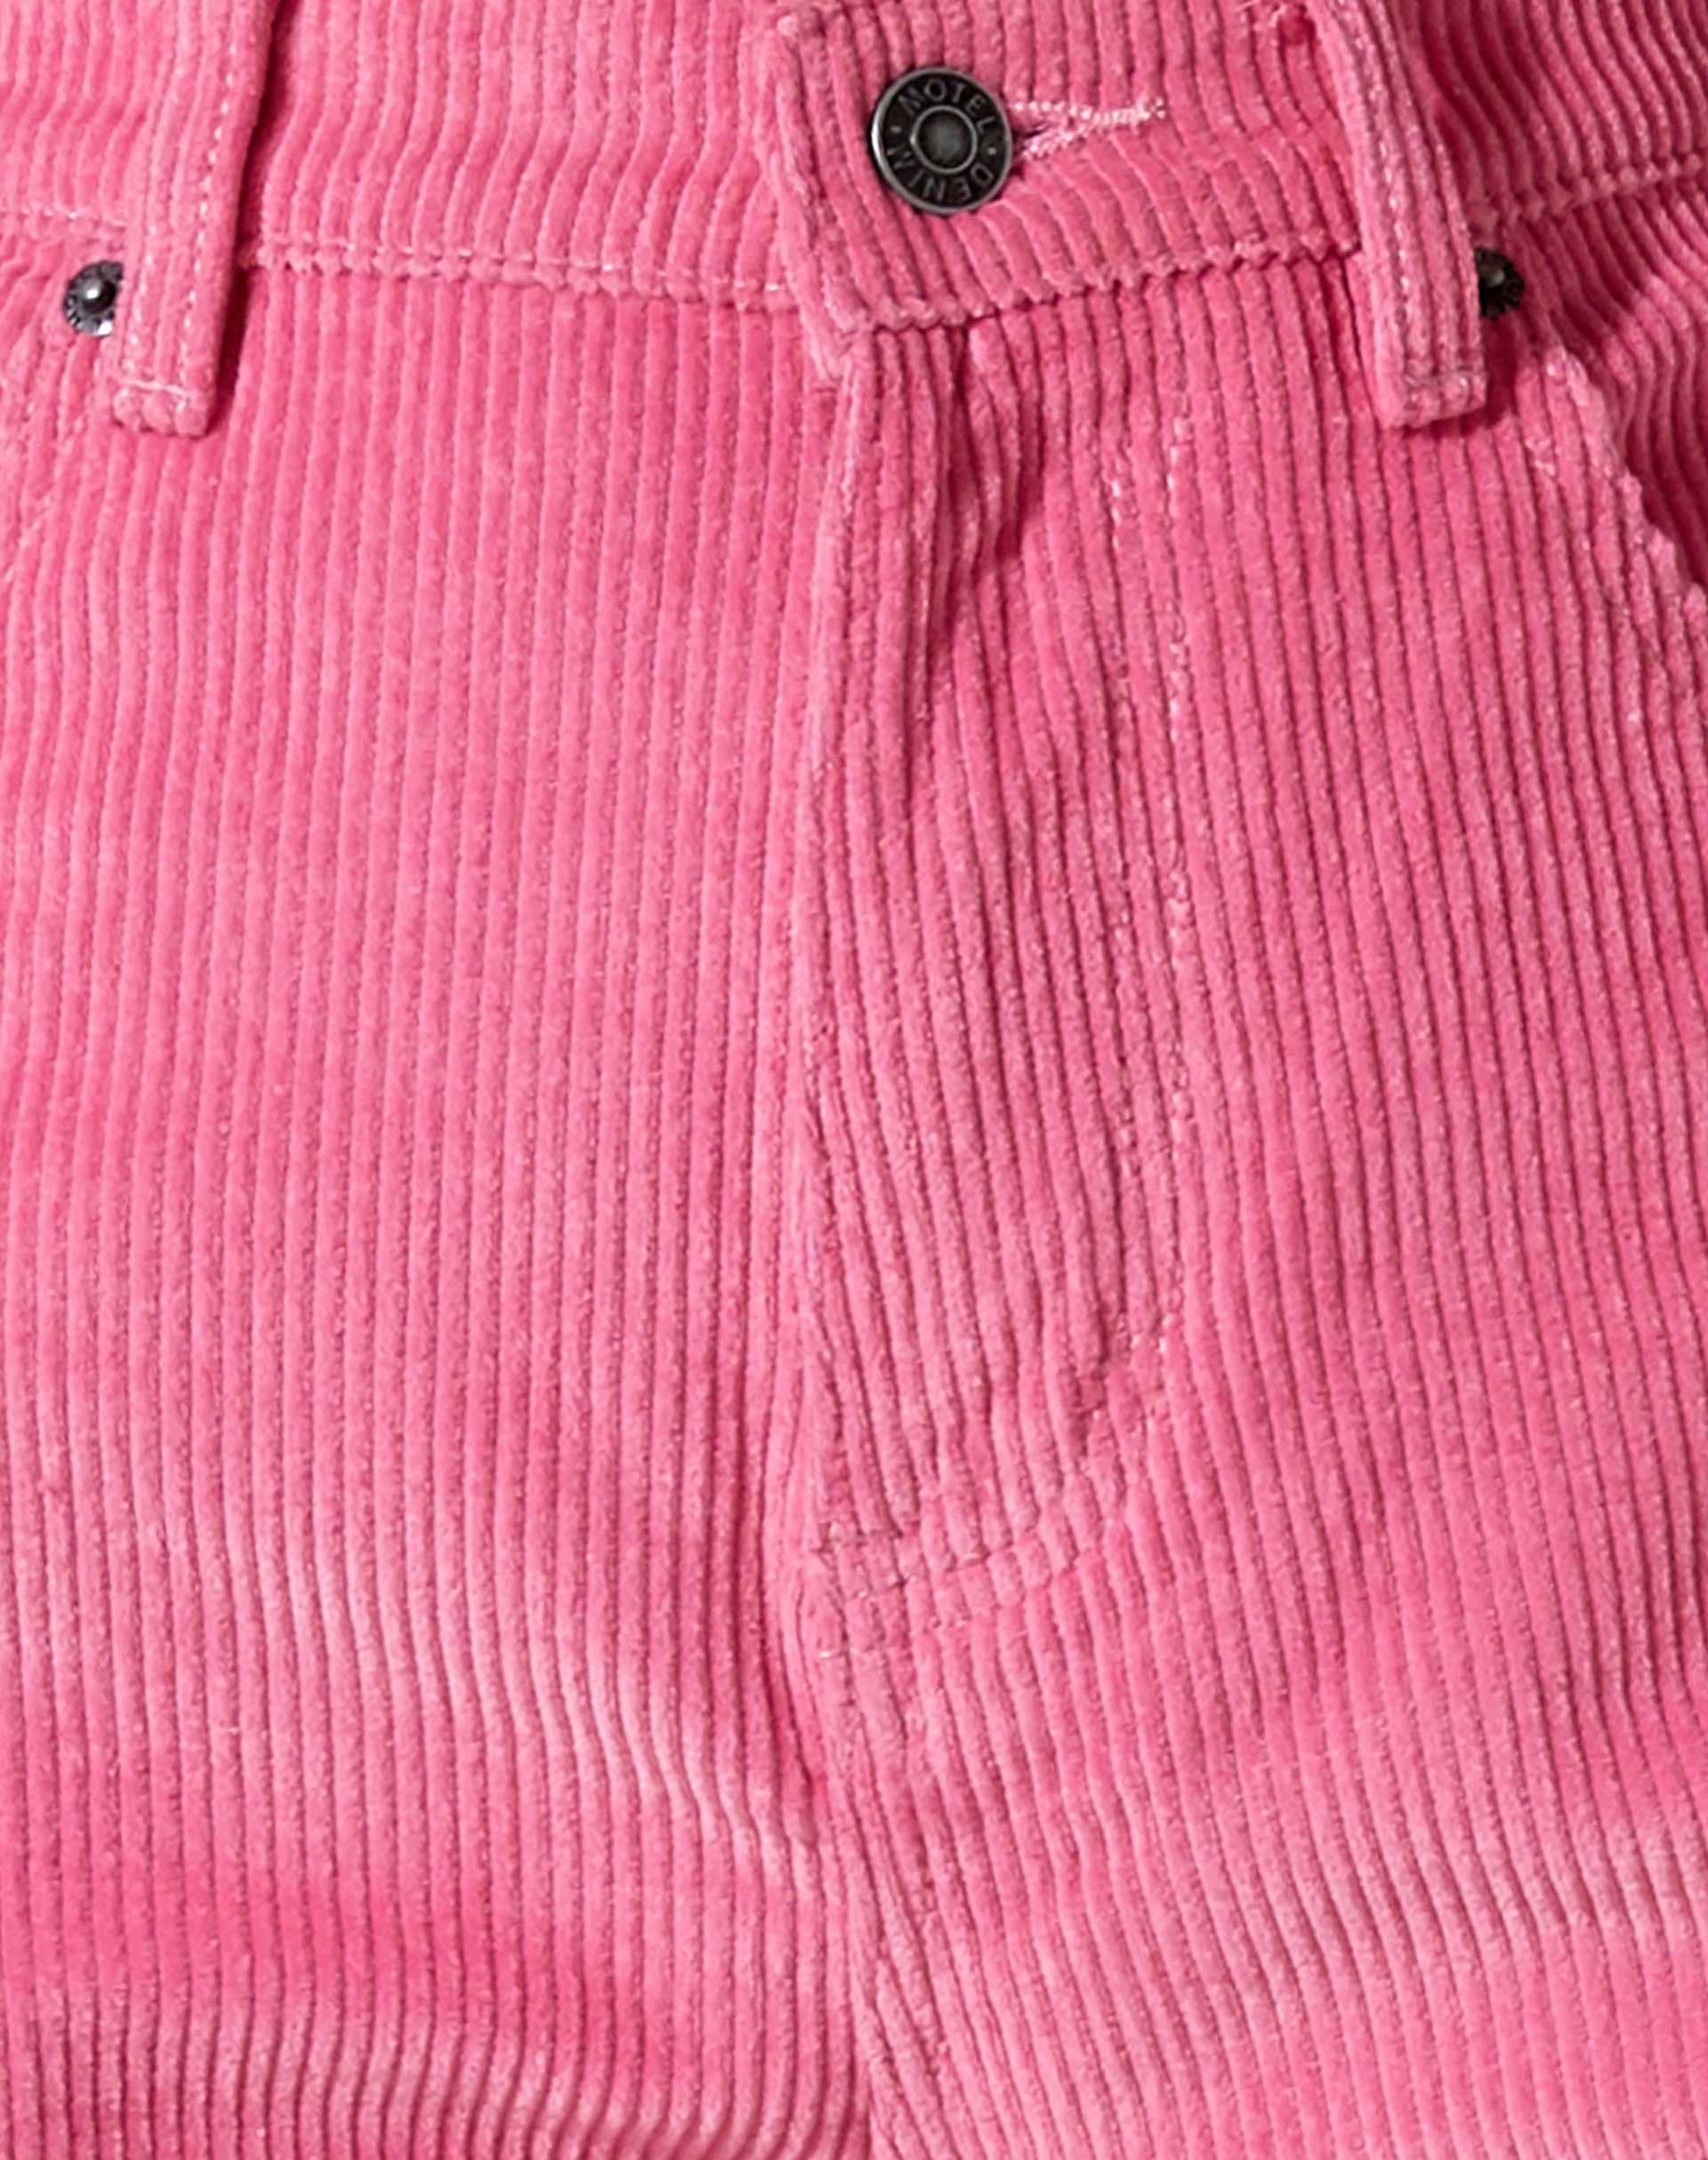 Light Pink Corduroy Pants  Banded Bubble or Ruffle Bottom  The Bubble Bee